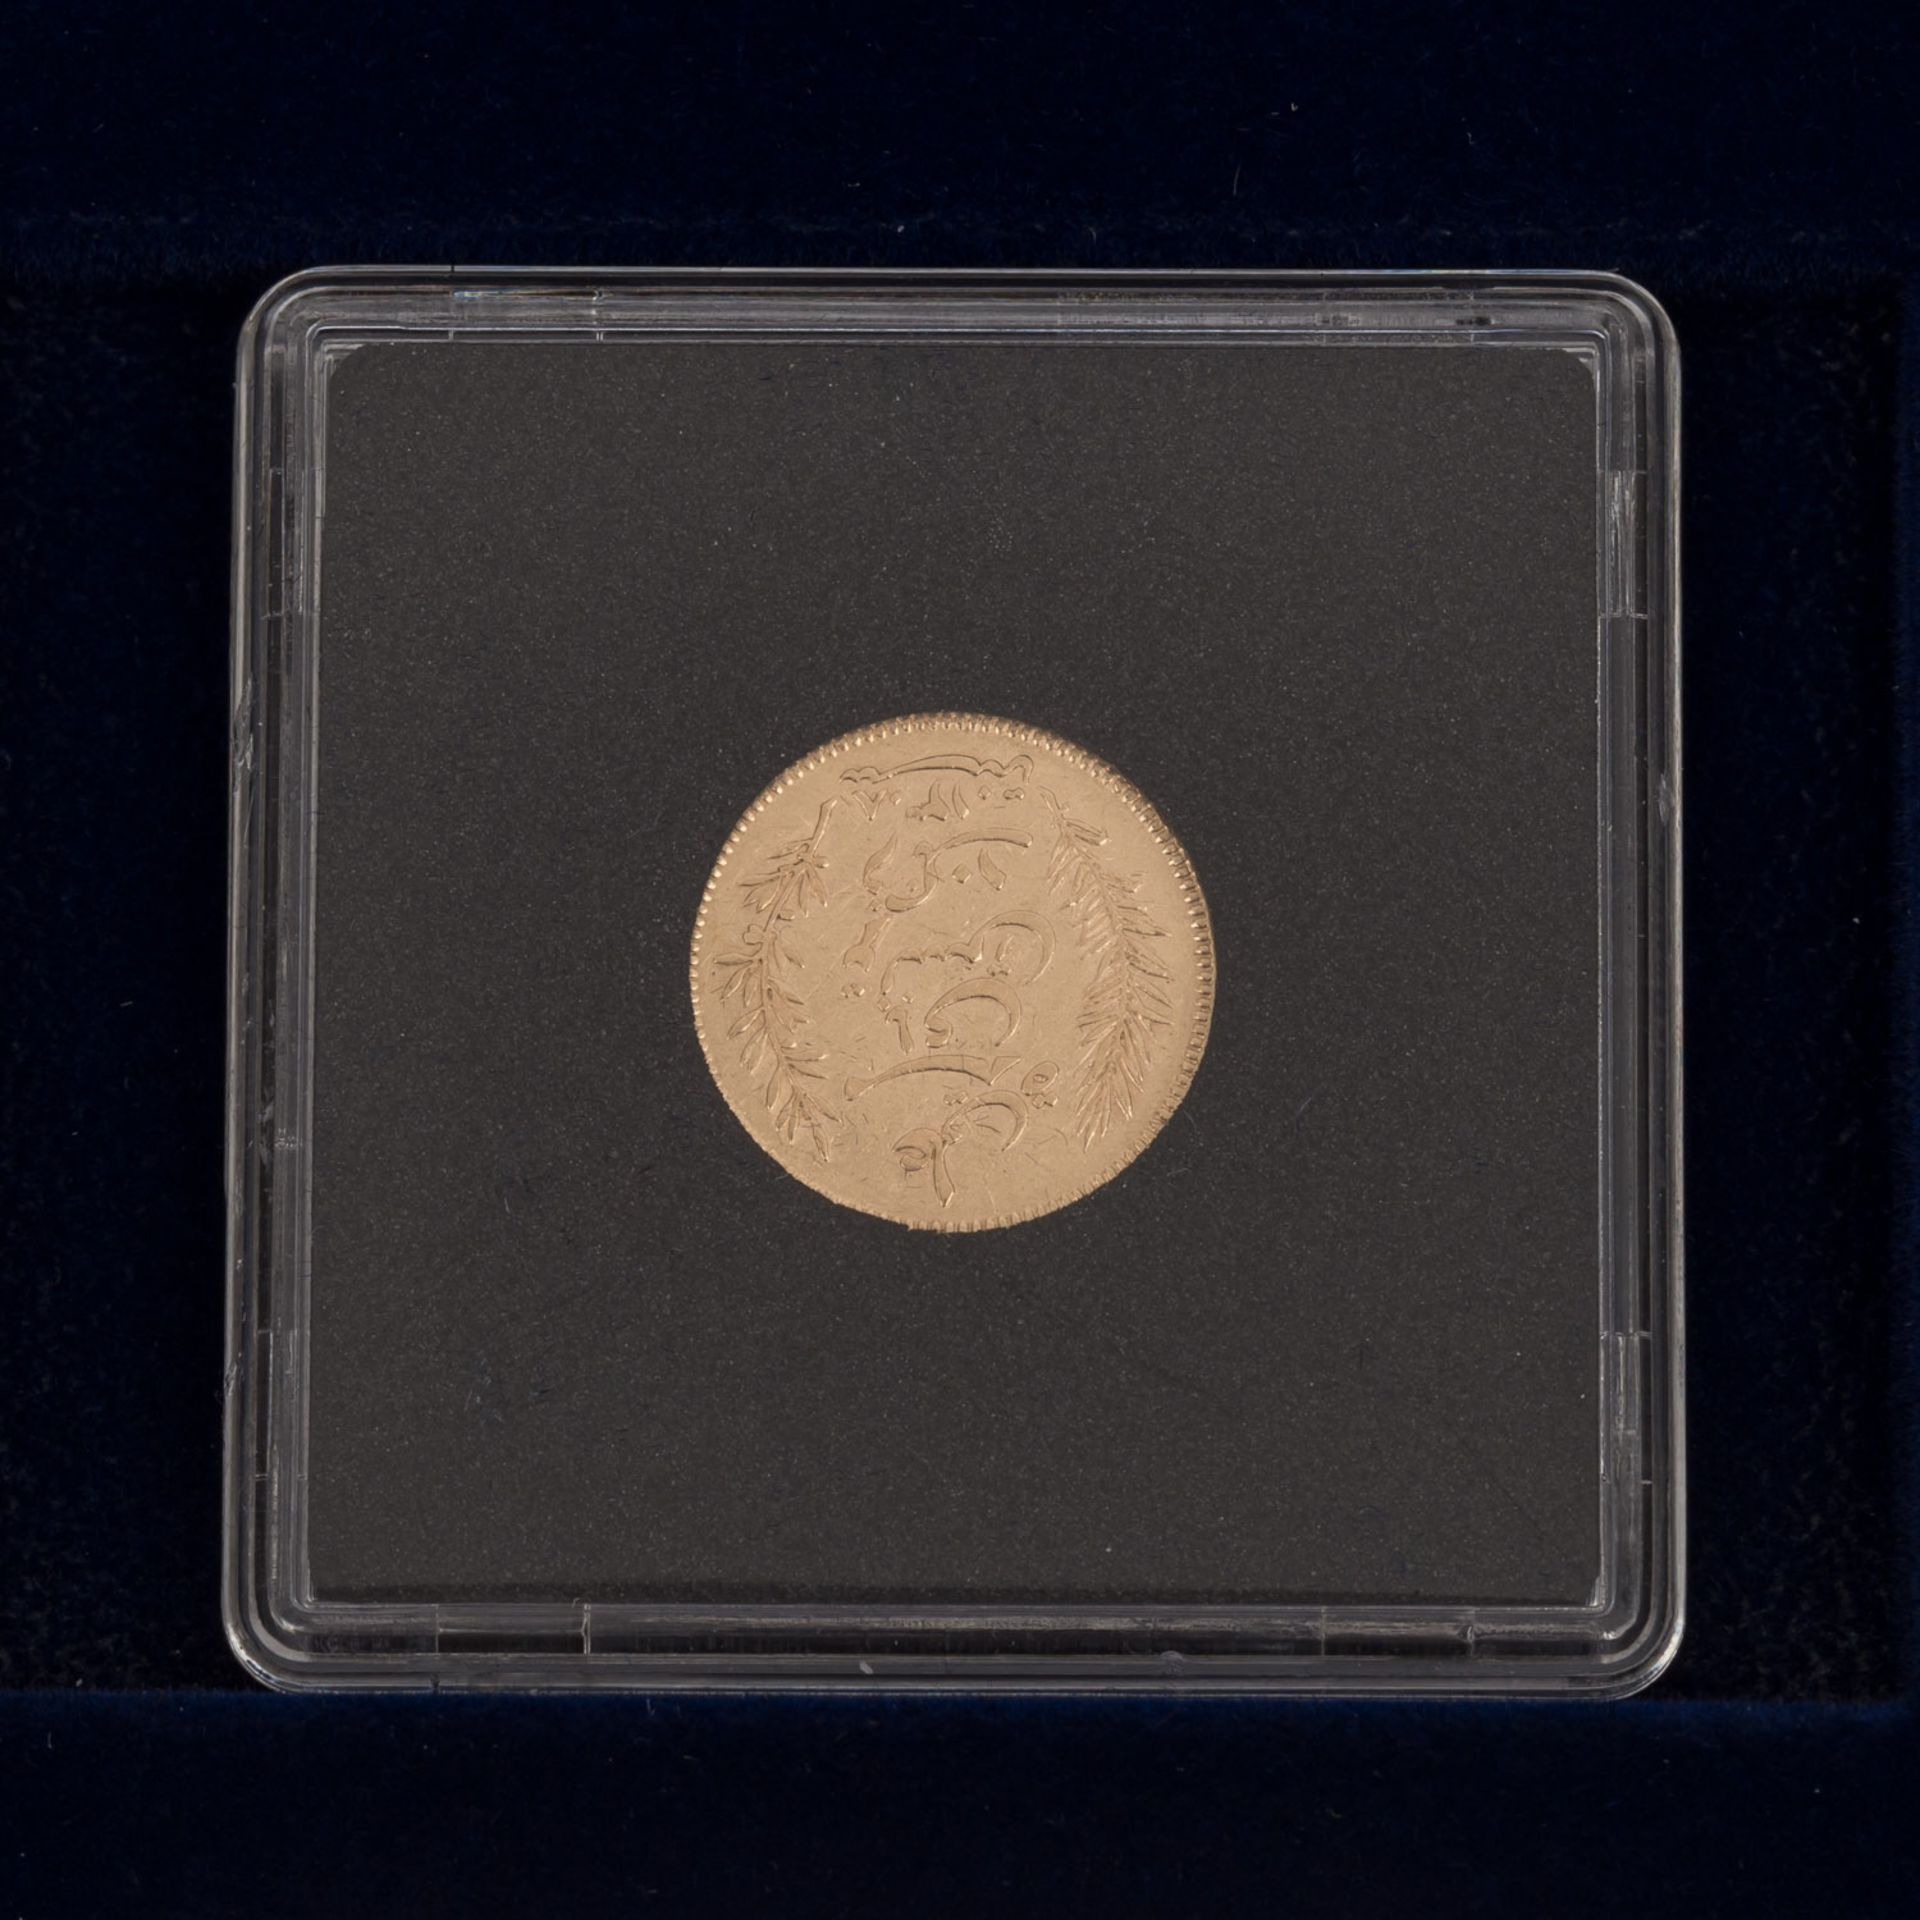 GOLD aus 1001 Nacht - Konvolut mit 20 Francs Tunesien 1892 A,10 Francs Tunesien 1891 A sowie Iran - Bild 4 aus 7